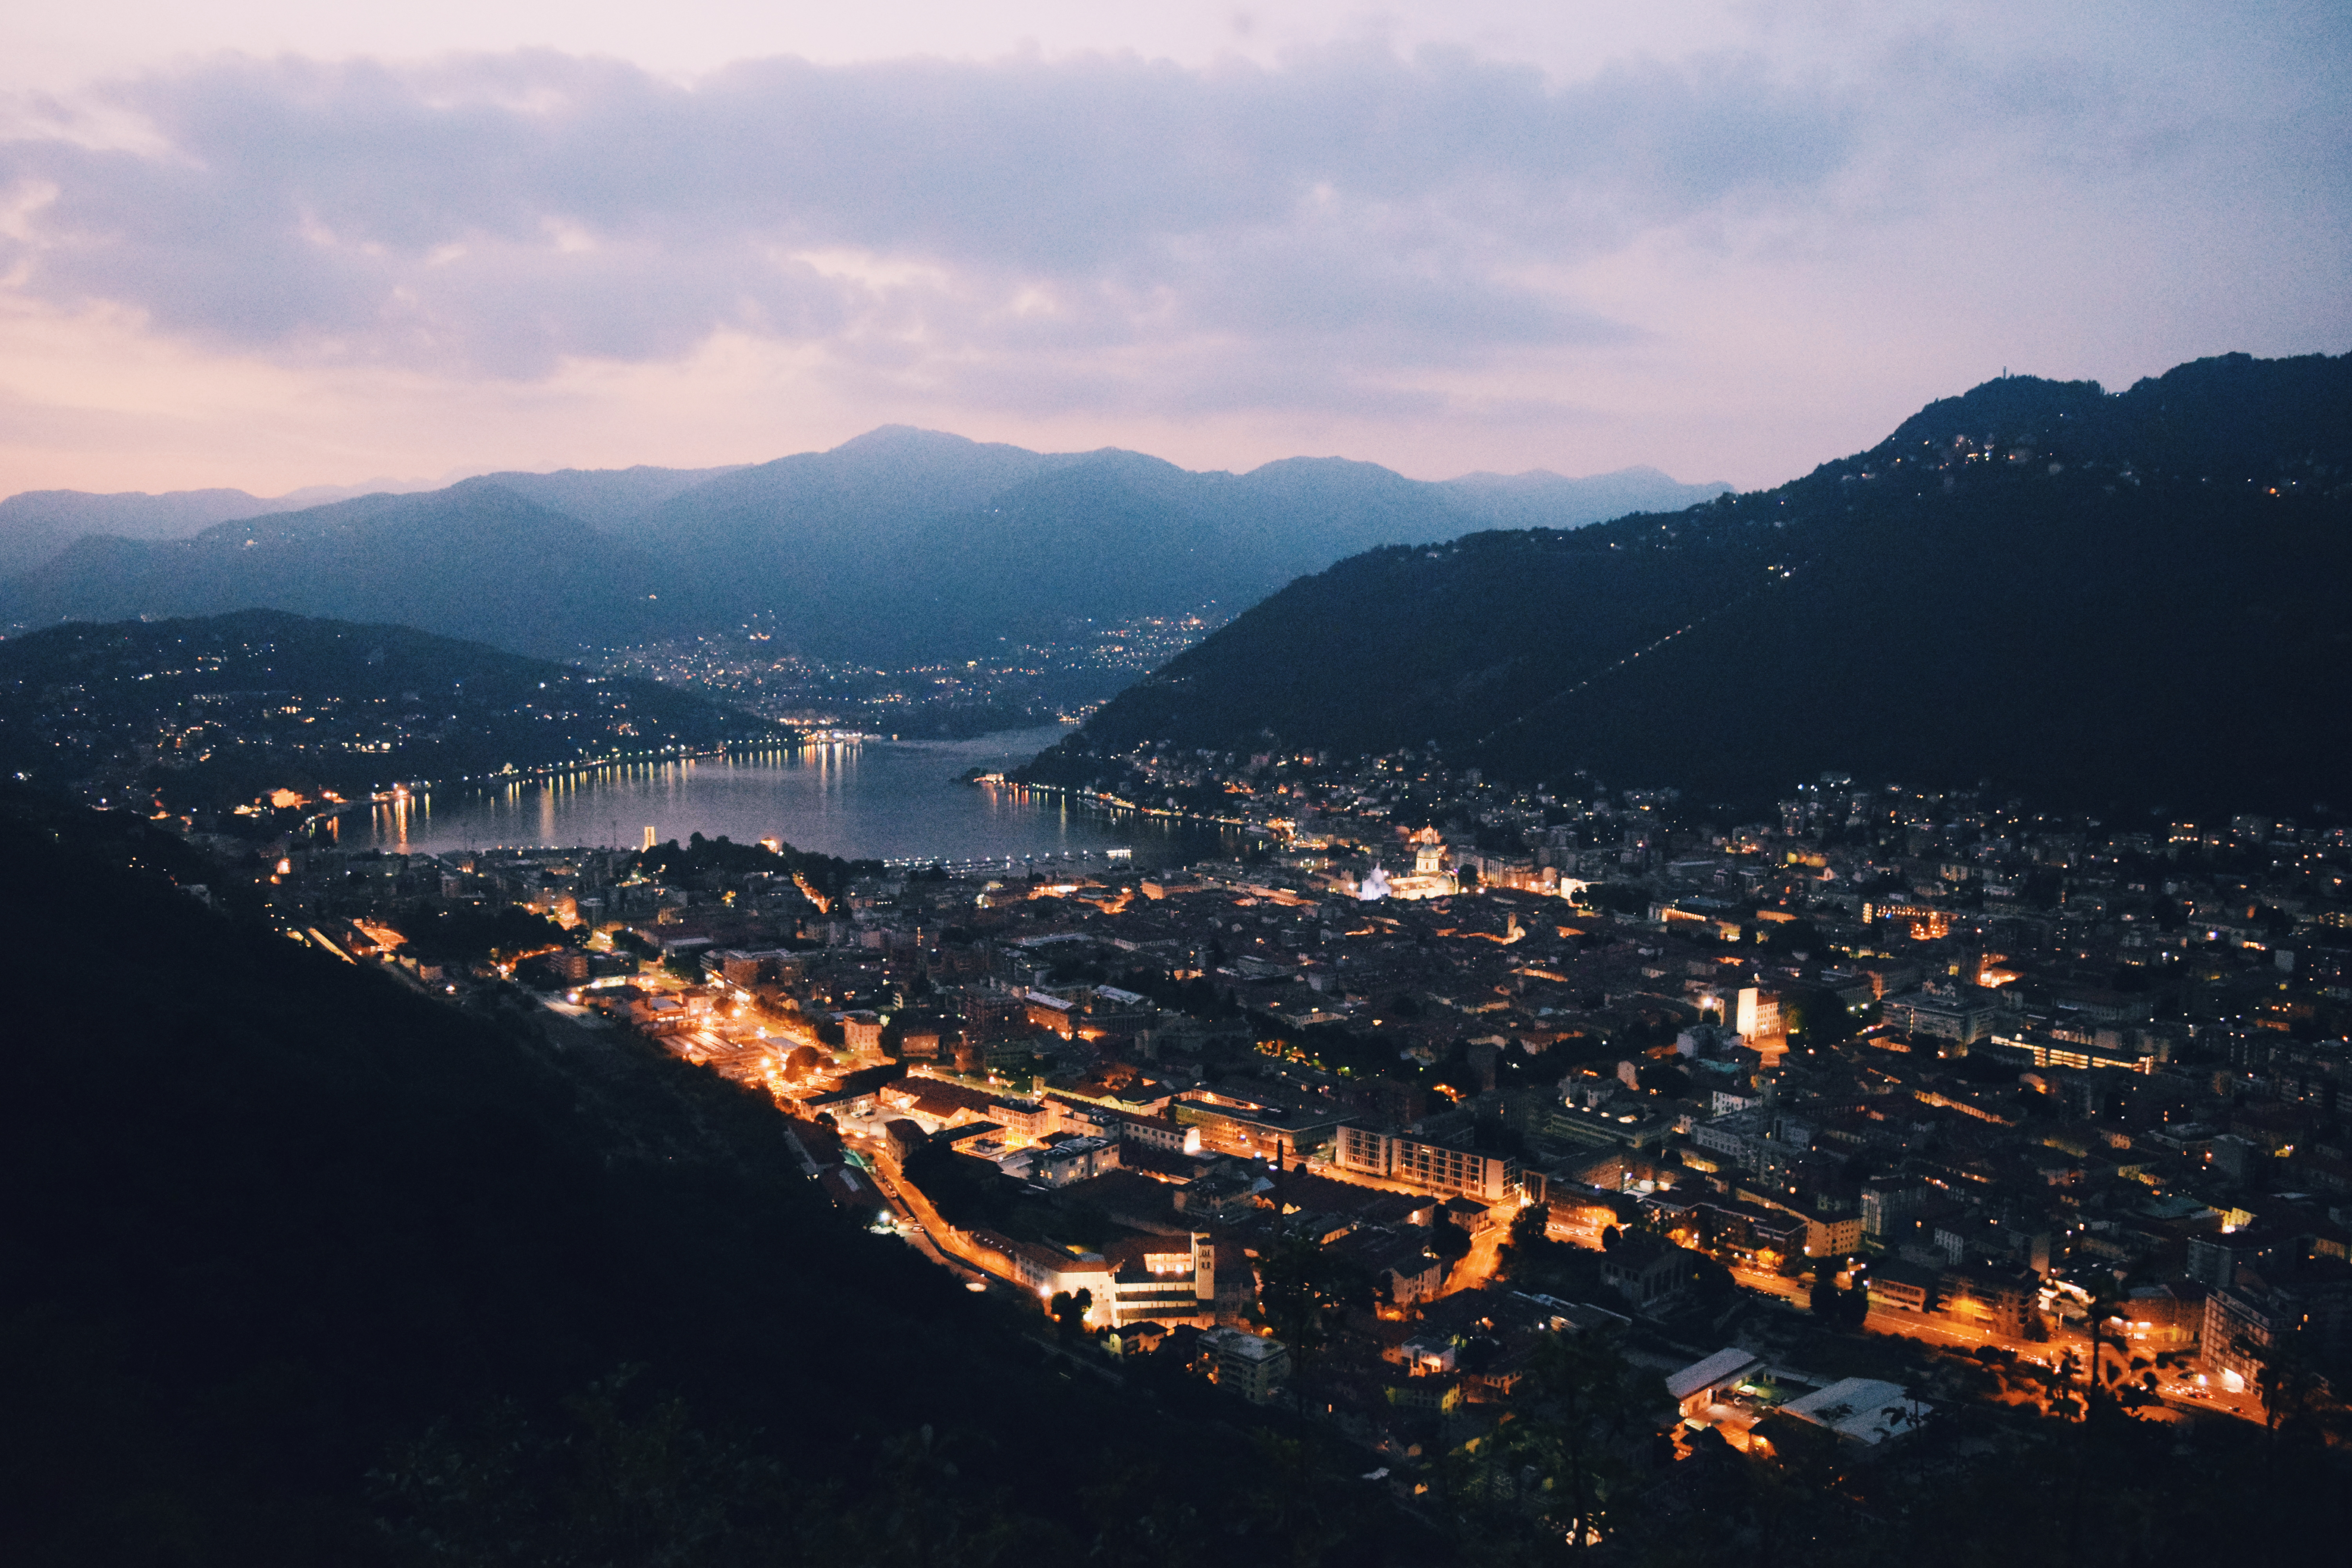 Lake Como in the evening